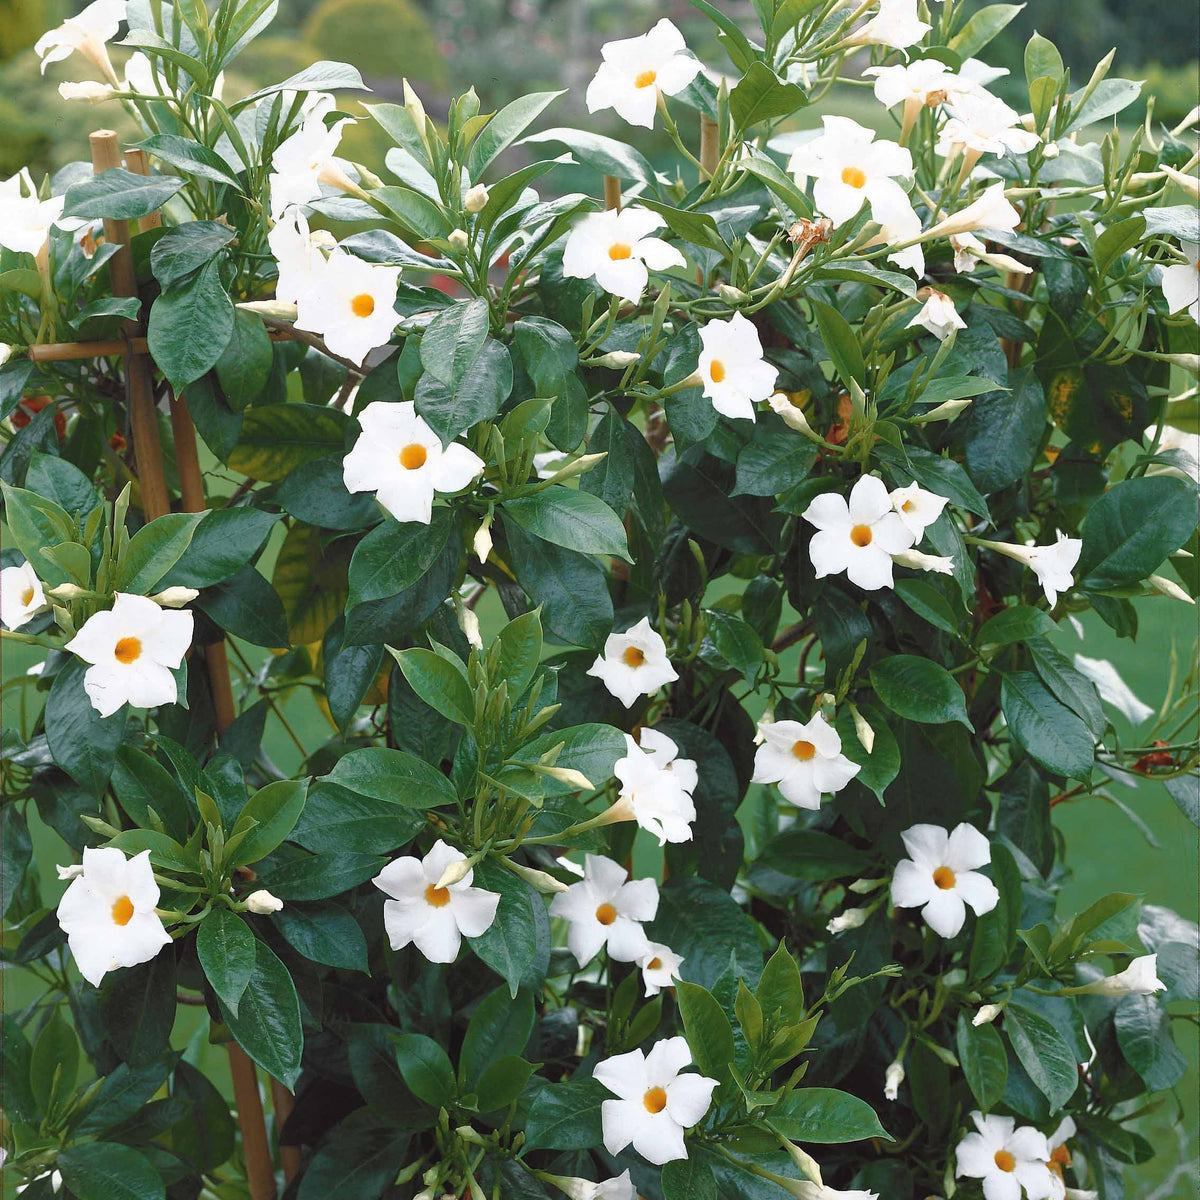 Jasmin du Brésil blanc - Dipladenia - Dipladenia - Fleurs vivaces